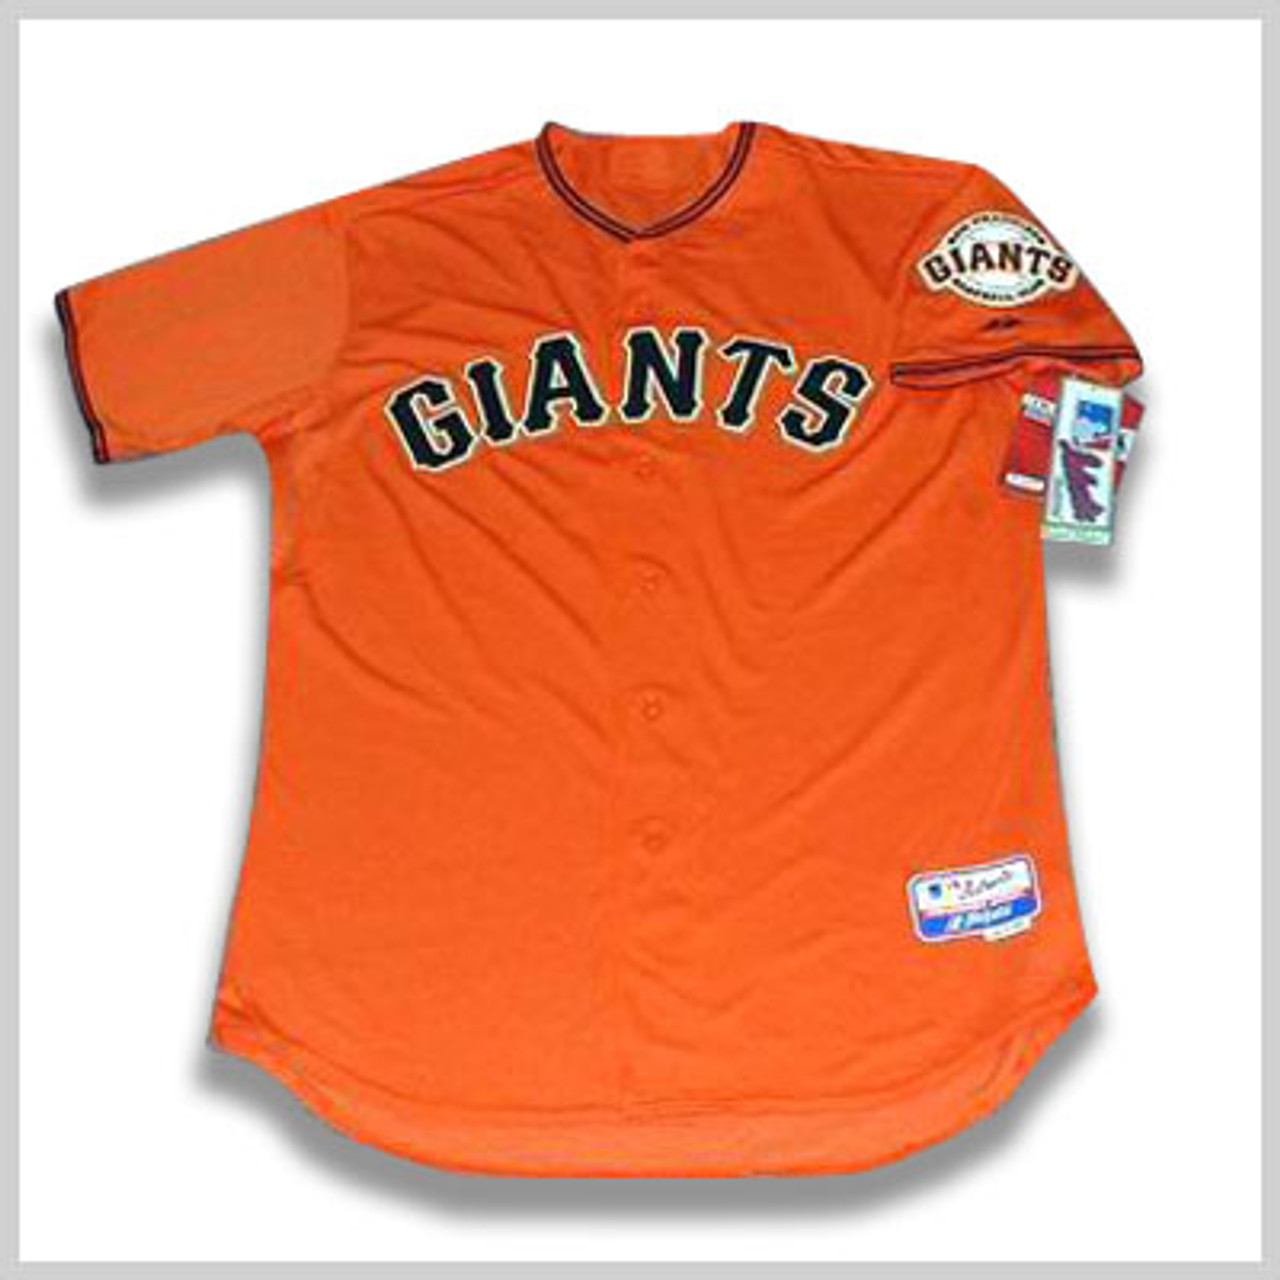 Majestic, Shirts, Majestic San Francisco Giants Authentic Jersey